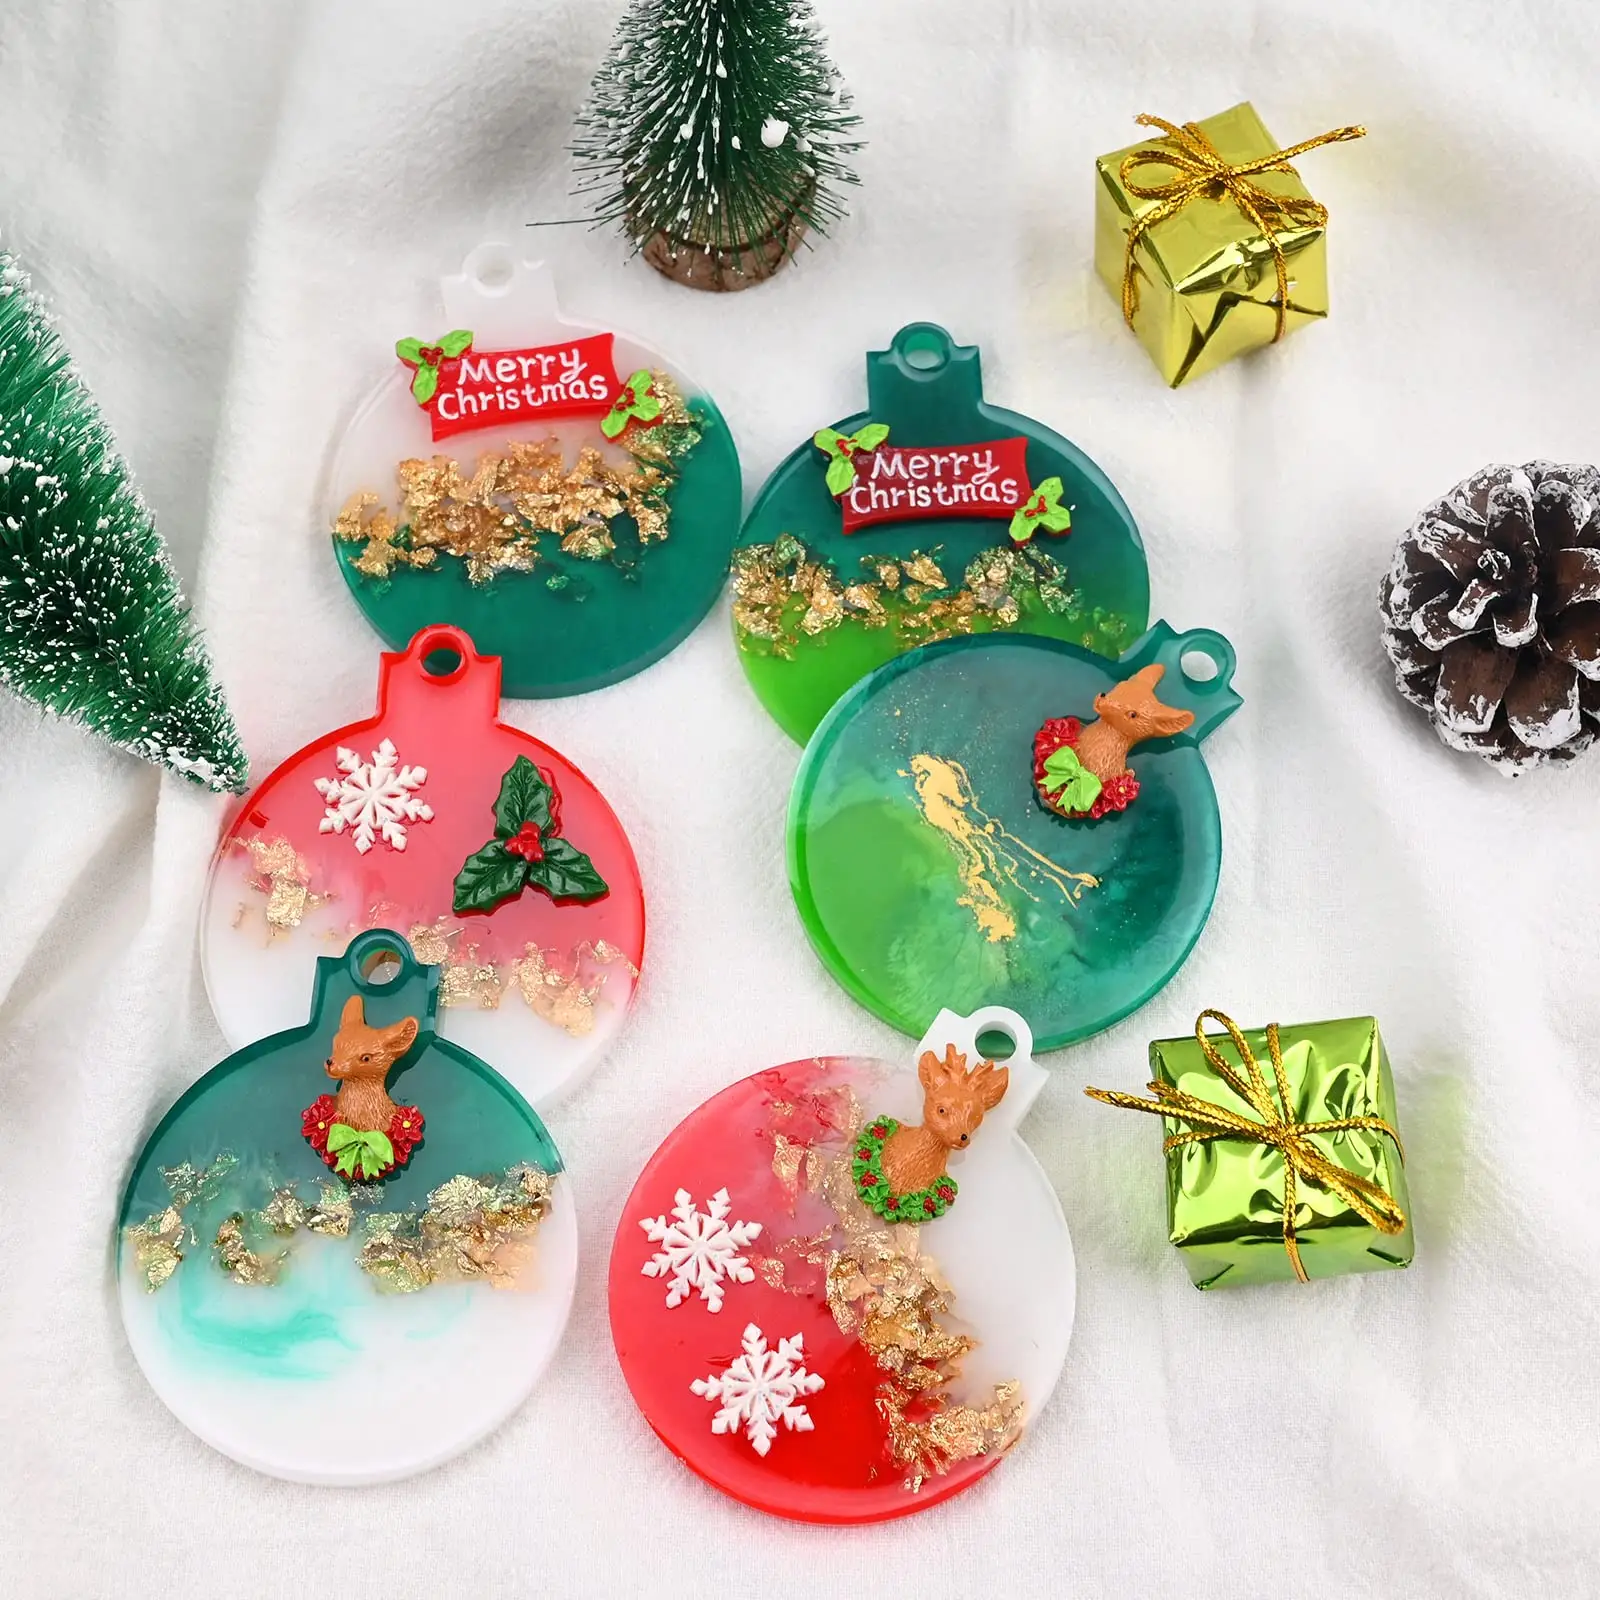 Moldes de resina de silicona para adorno de Navidad, molde colgante de resina epoxi de forma redonda para manualidades DIY, decoraciones navideñas